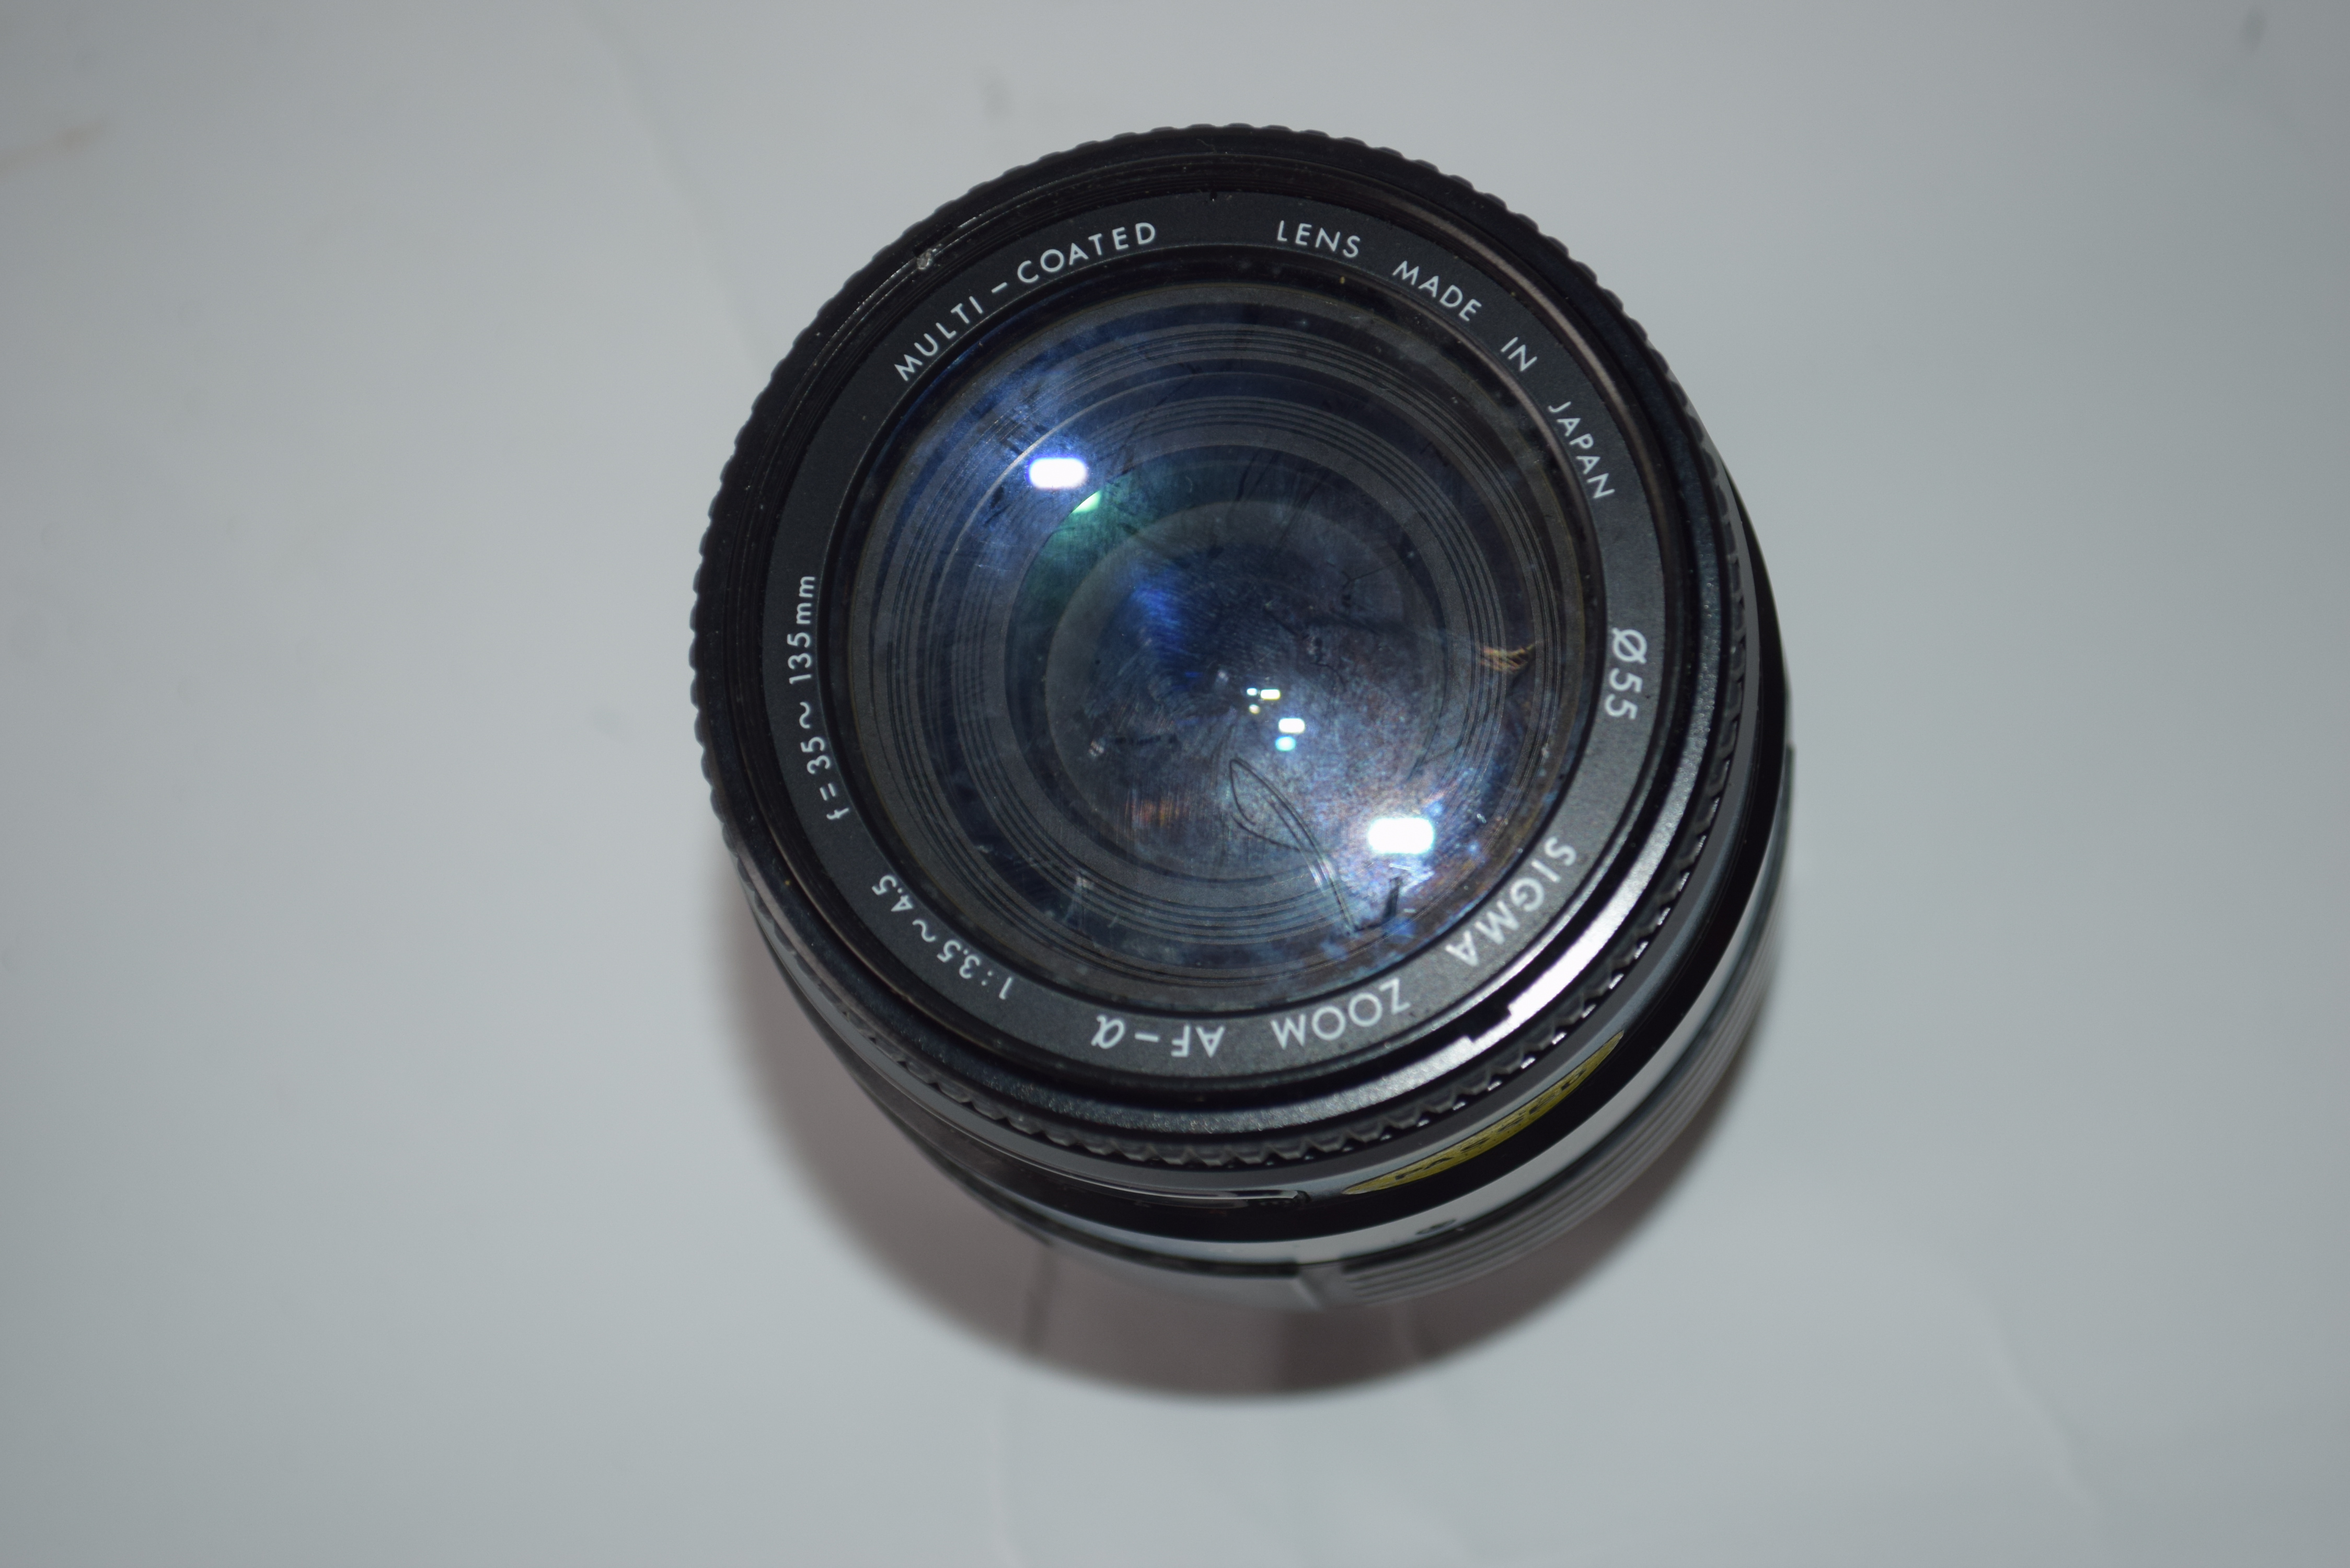 Minolta 7000 AF together with Sigma Zoom lens, bag and manual - Image 4 of 5